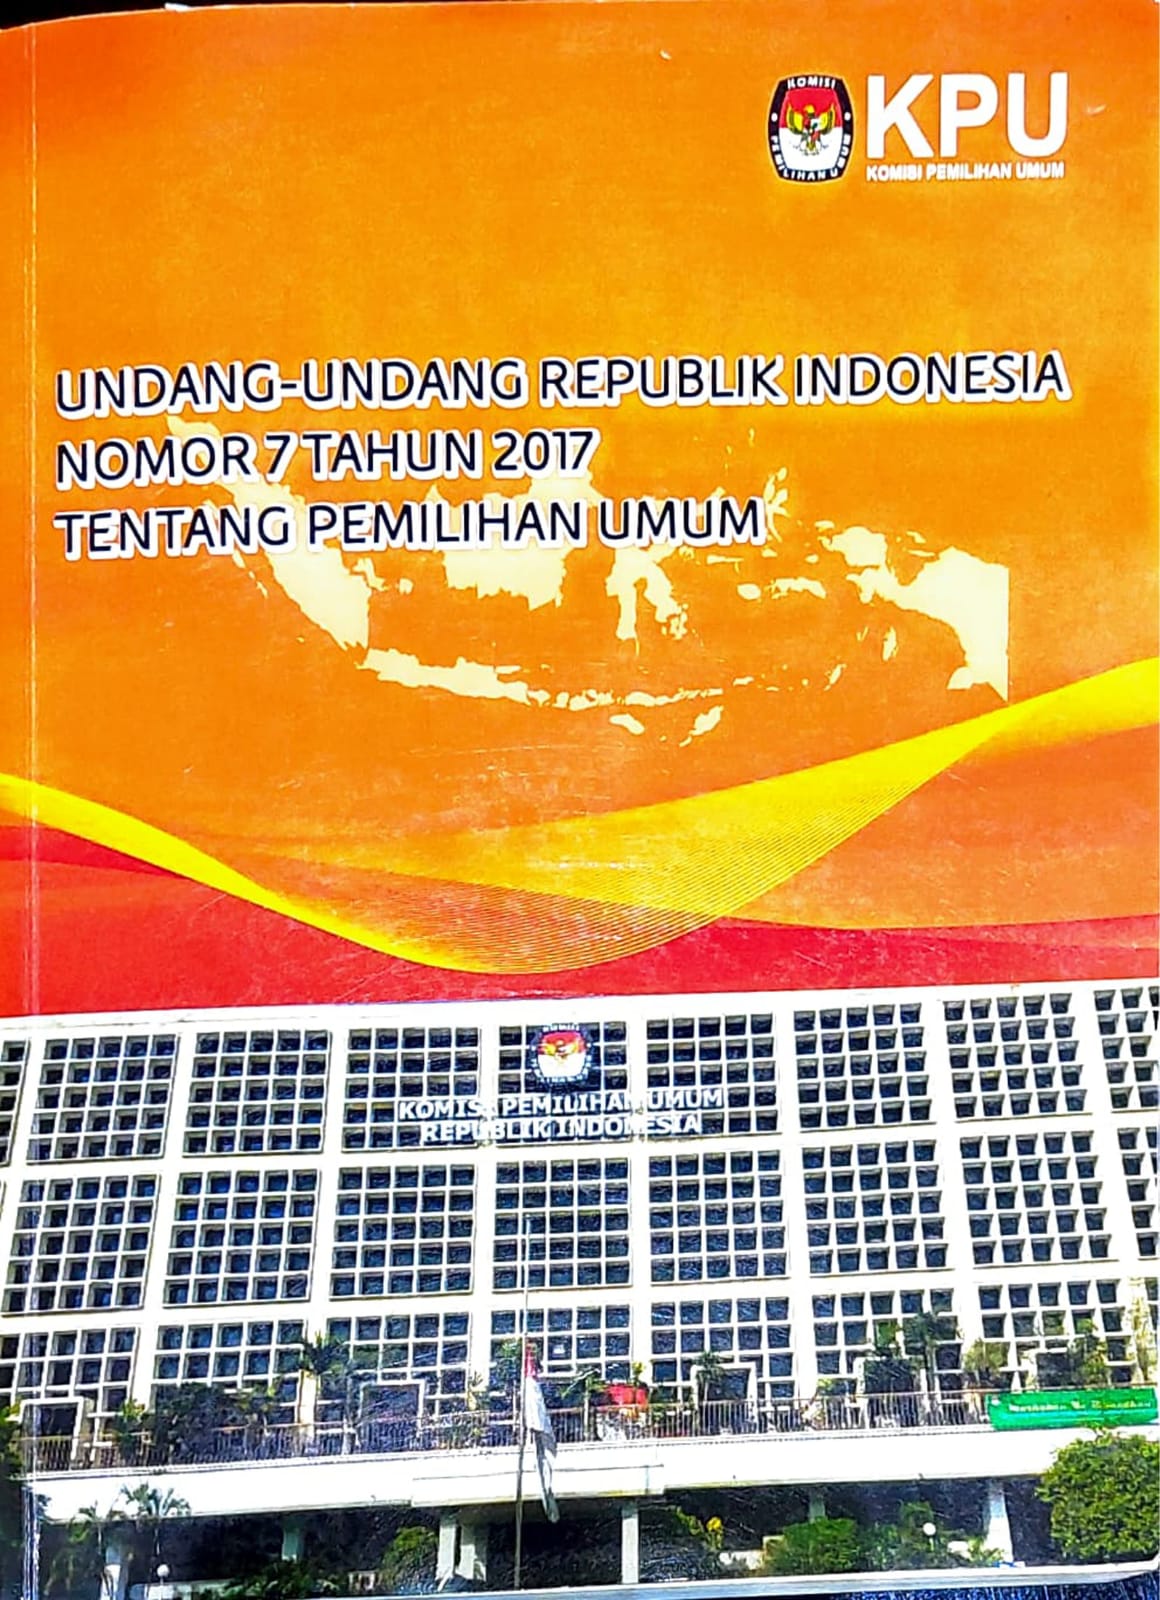 Undang-undang republik indonesia nomor 7 tahun 2017 tentang pemilihan umum